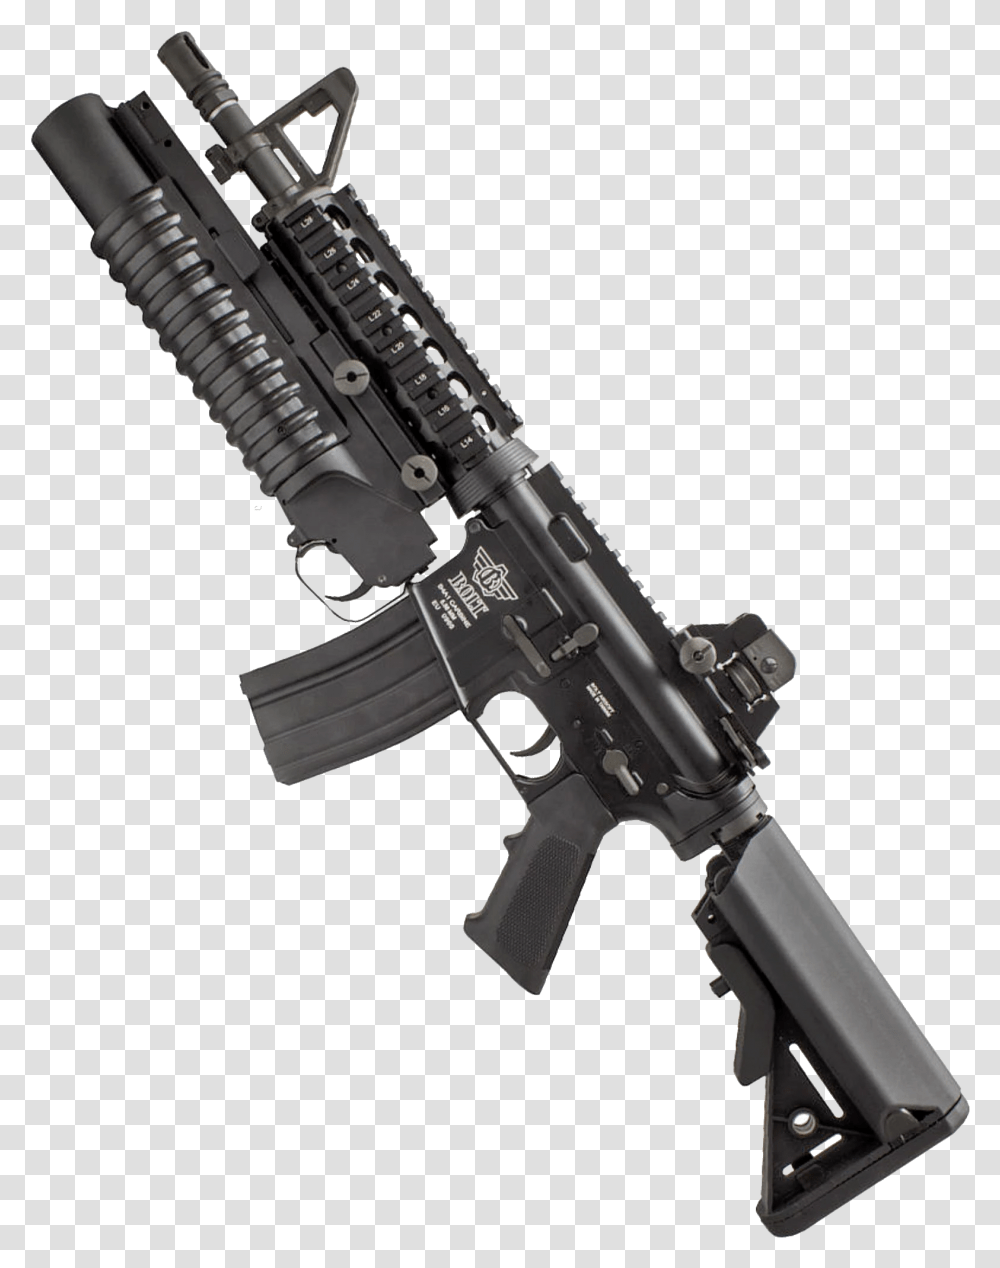 Grenade Launcher M4 Grenade Launcher, Gun, Weapon, Weaponry, Rifle Transparent Png